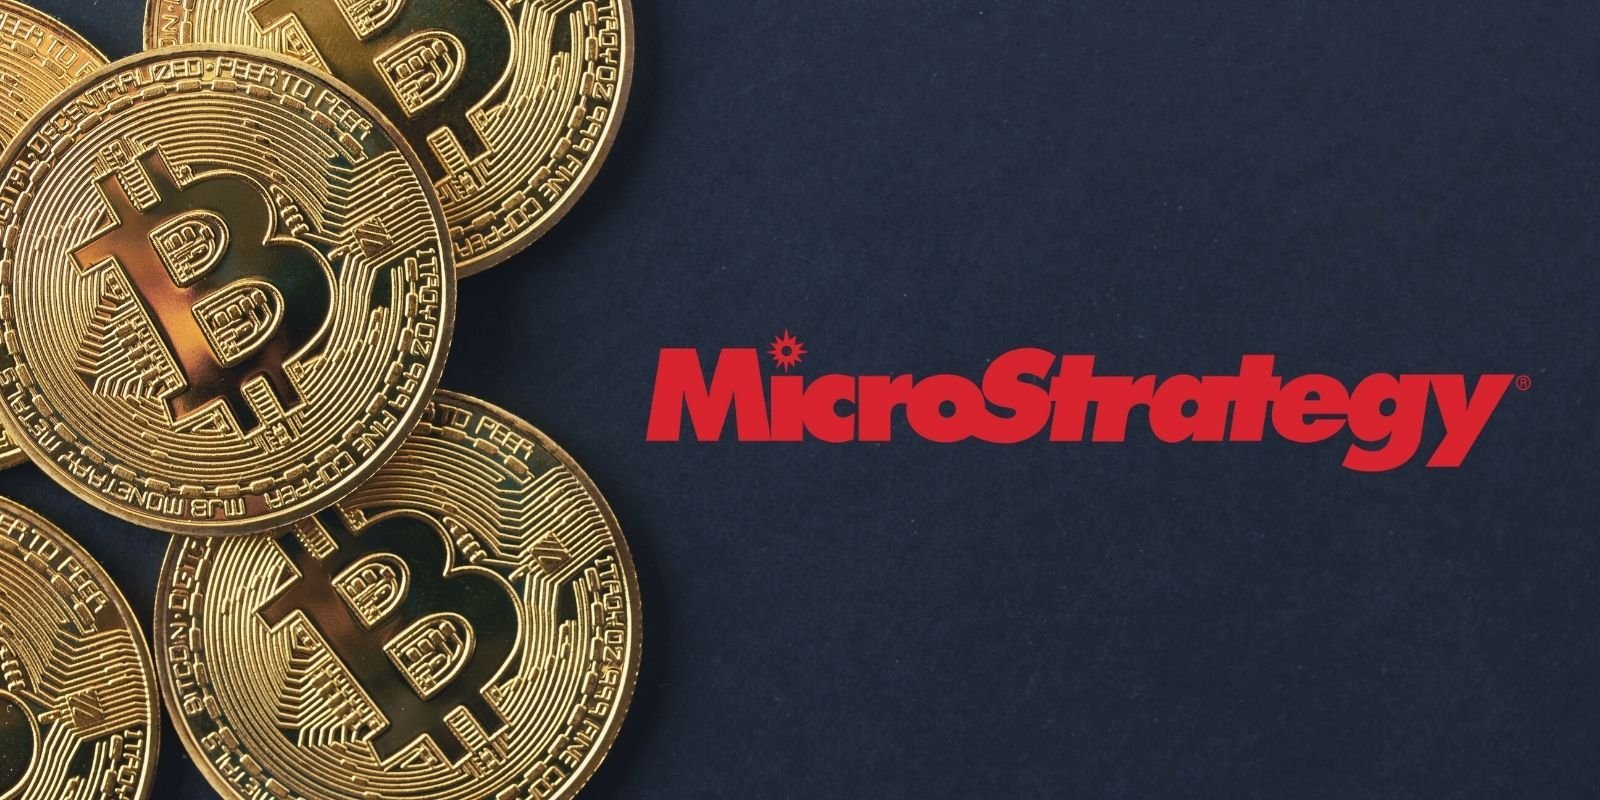 microstrategy bitcoin buys